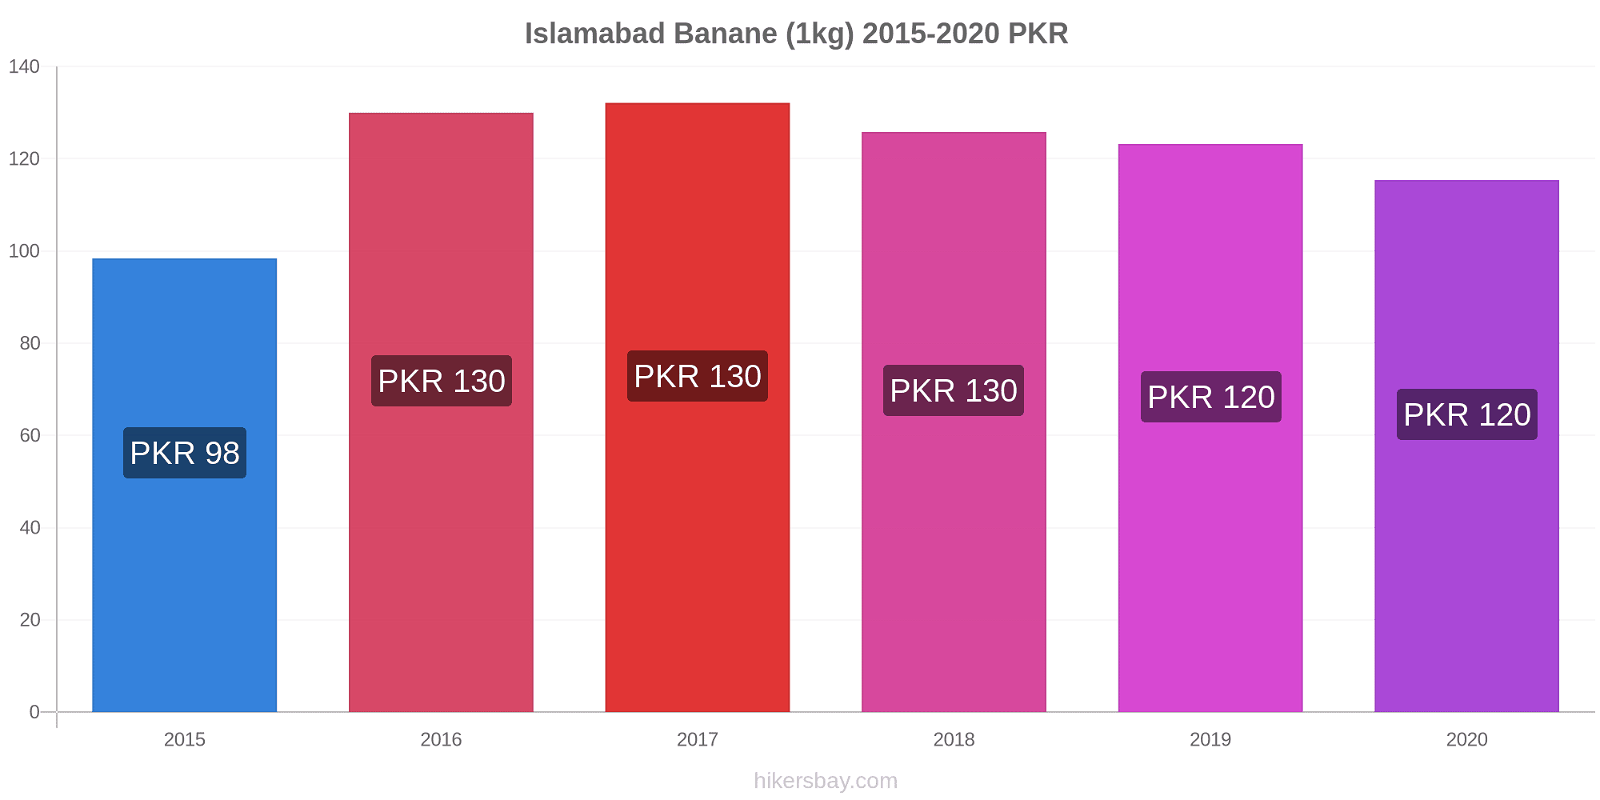 Islamabad variazioni di prezzo Banana (1kg) hikersbay.com